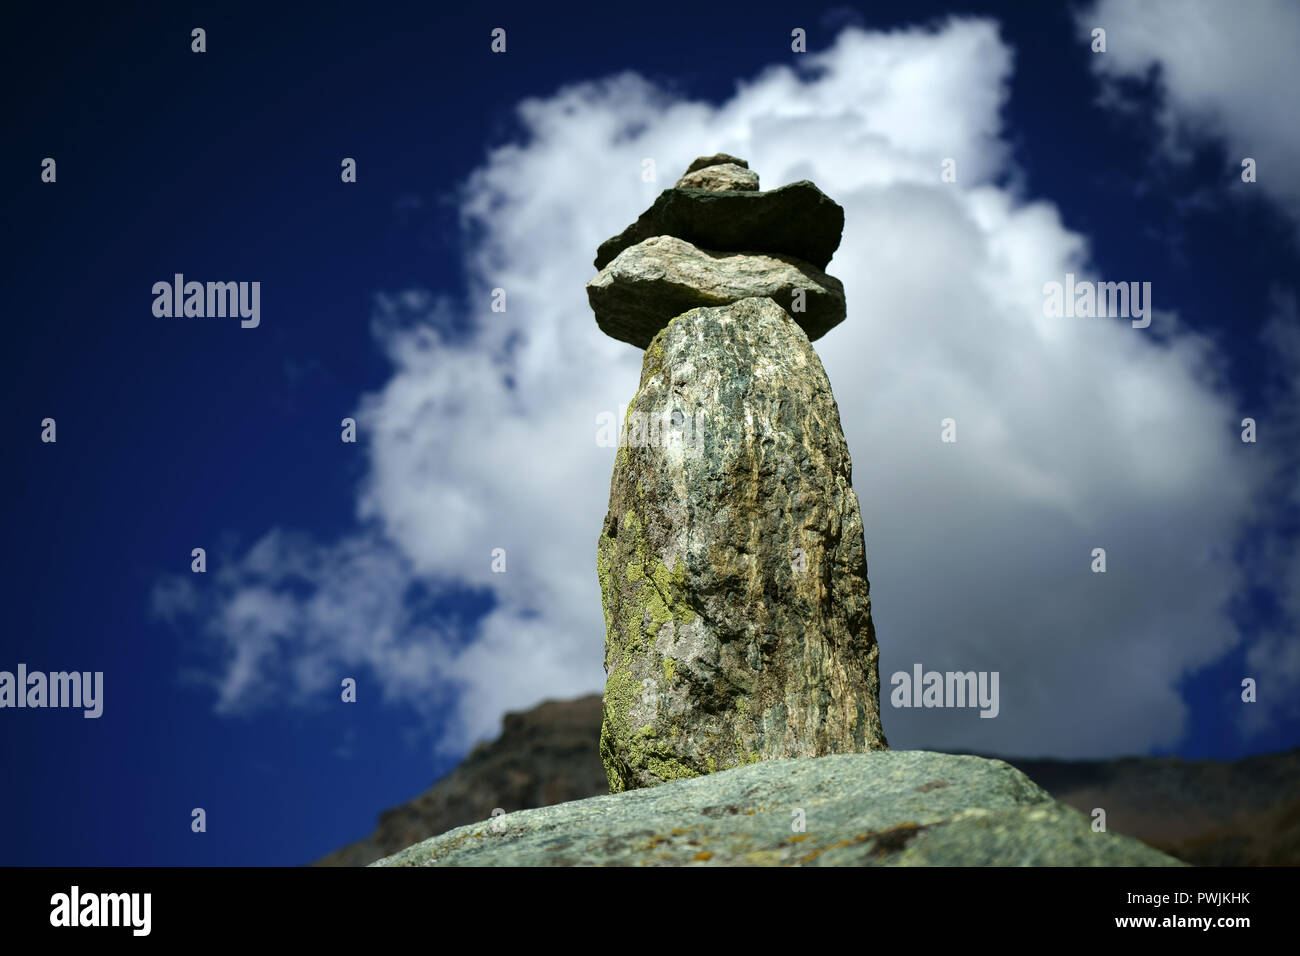 Rock cairn balancing on boulder, Moiry glacier, Valais alps, Switzerland Stock Photo